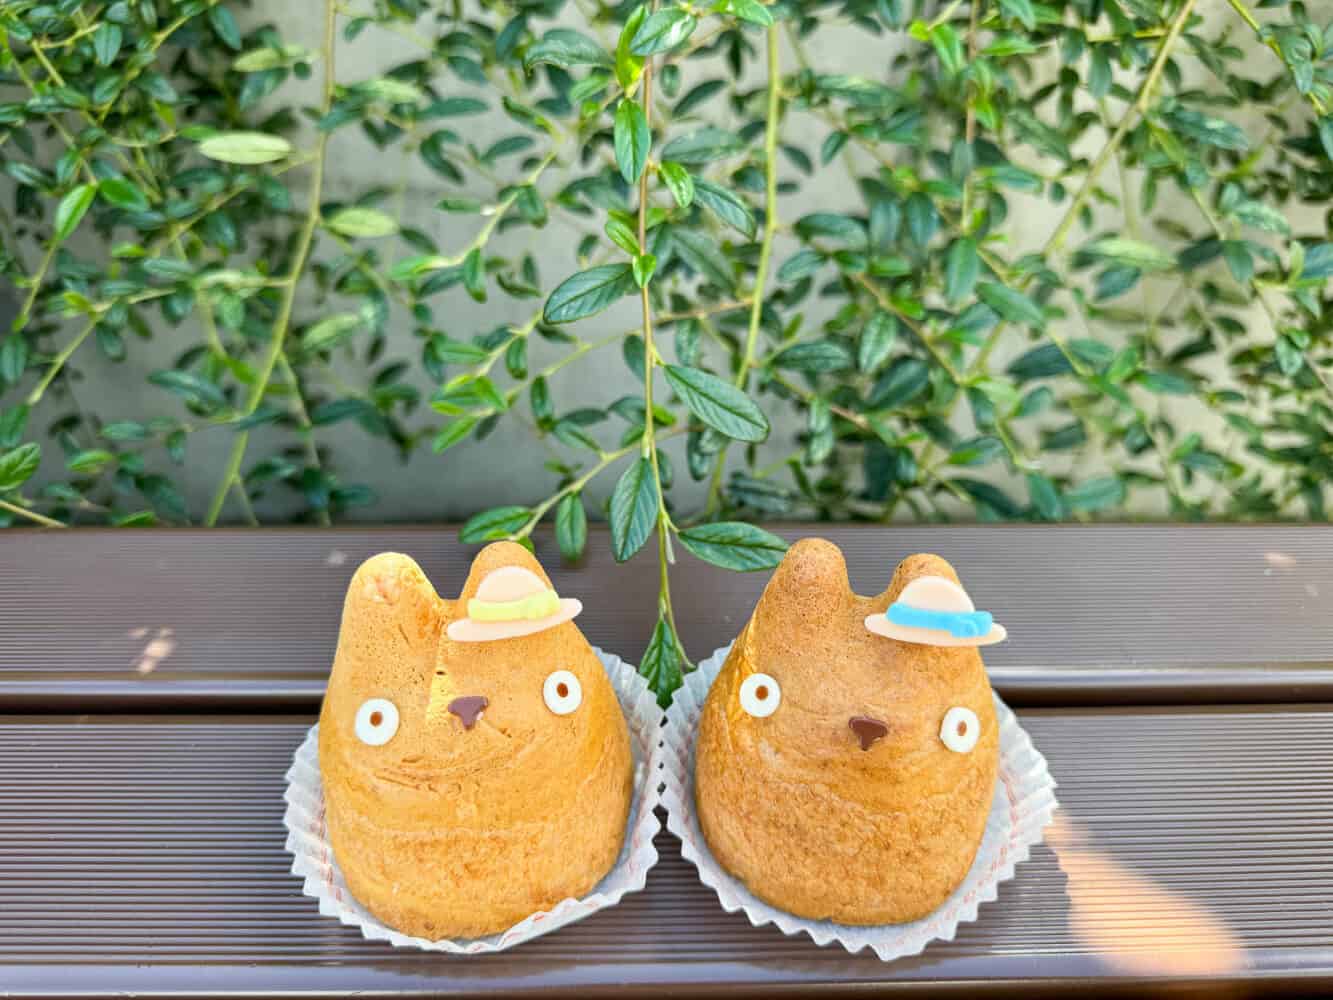 Totoro cream puffs from Shiro-Hige’s Cream Puff Factory in Tokyo